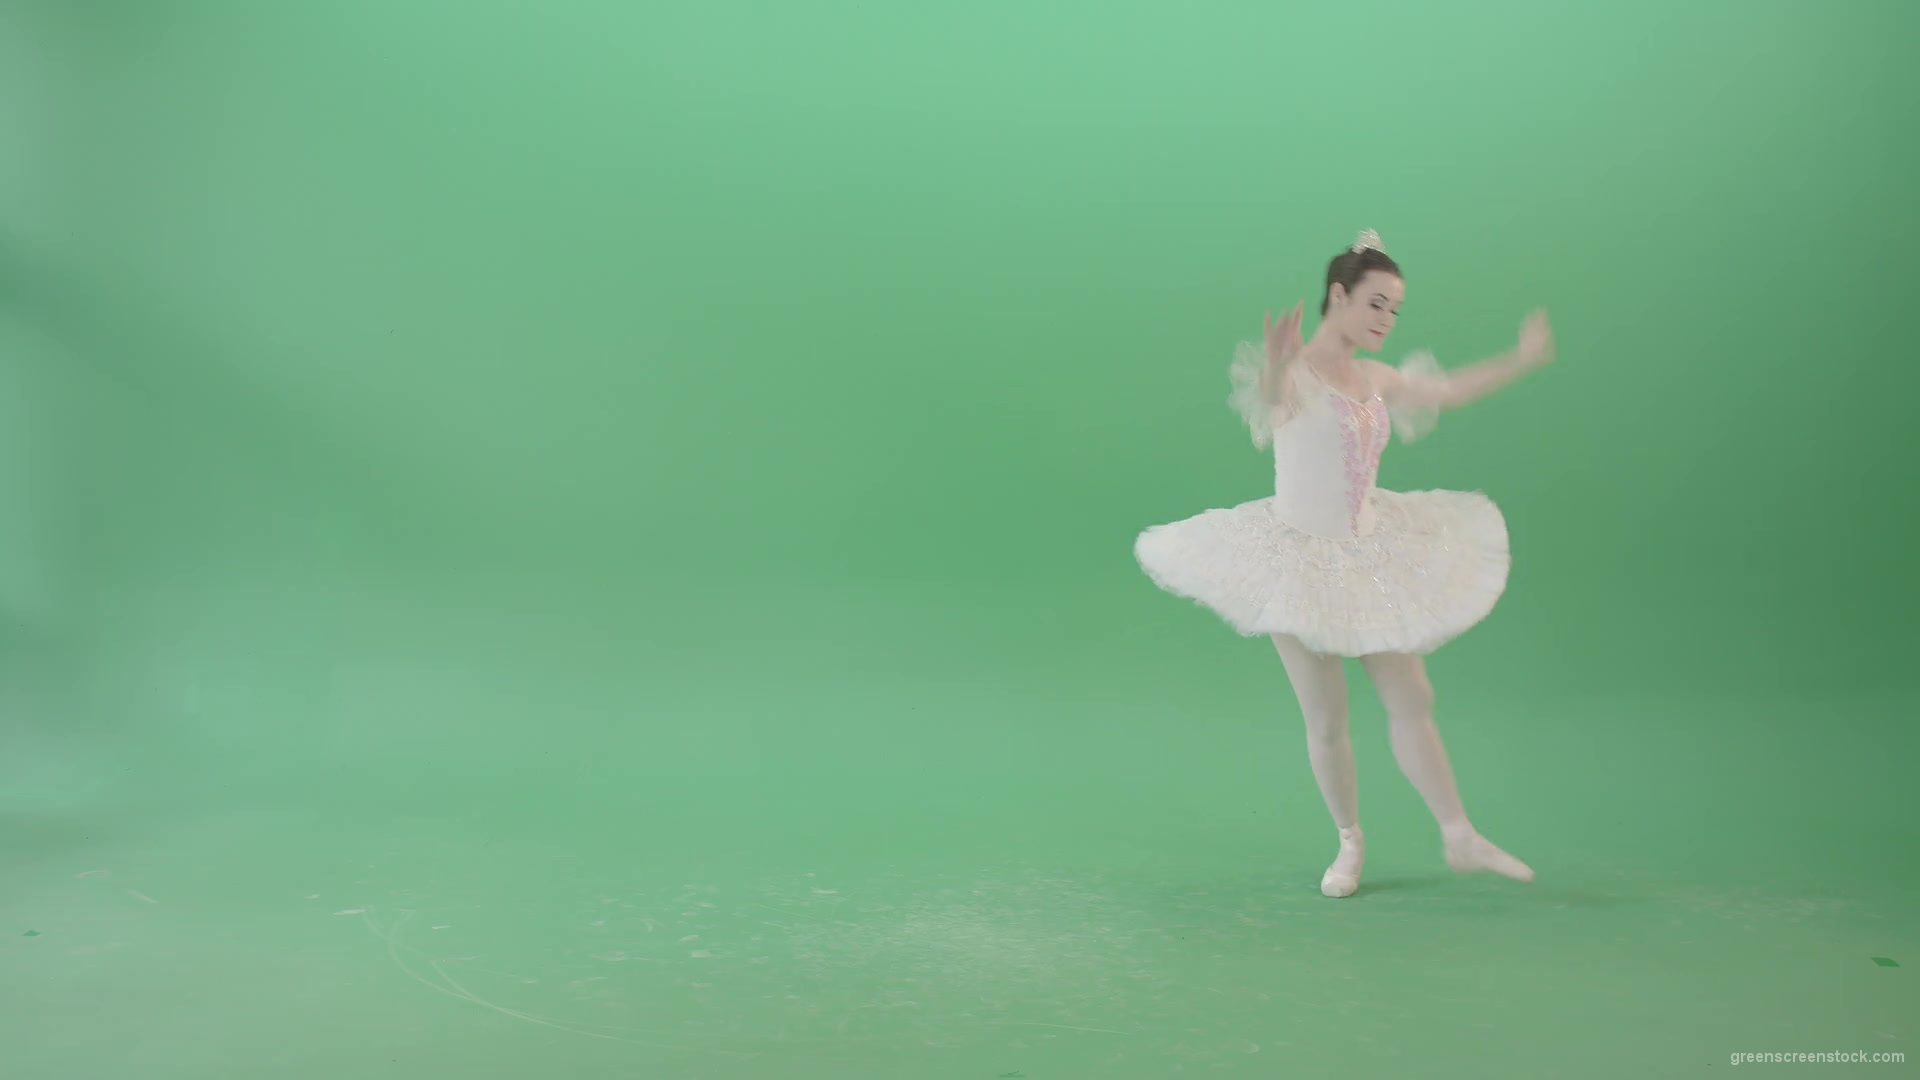 Flexibility-ballet-dancing-performance-girl-dancing-Classical-adagio-opera-on-green-screen-4K-Video-footage-1920_006 Green Screen Stock